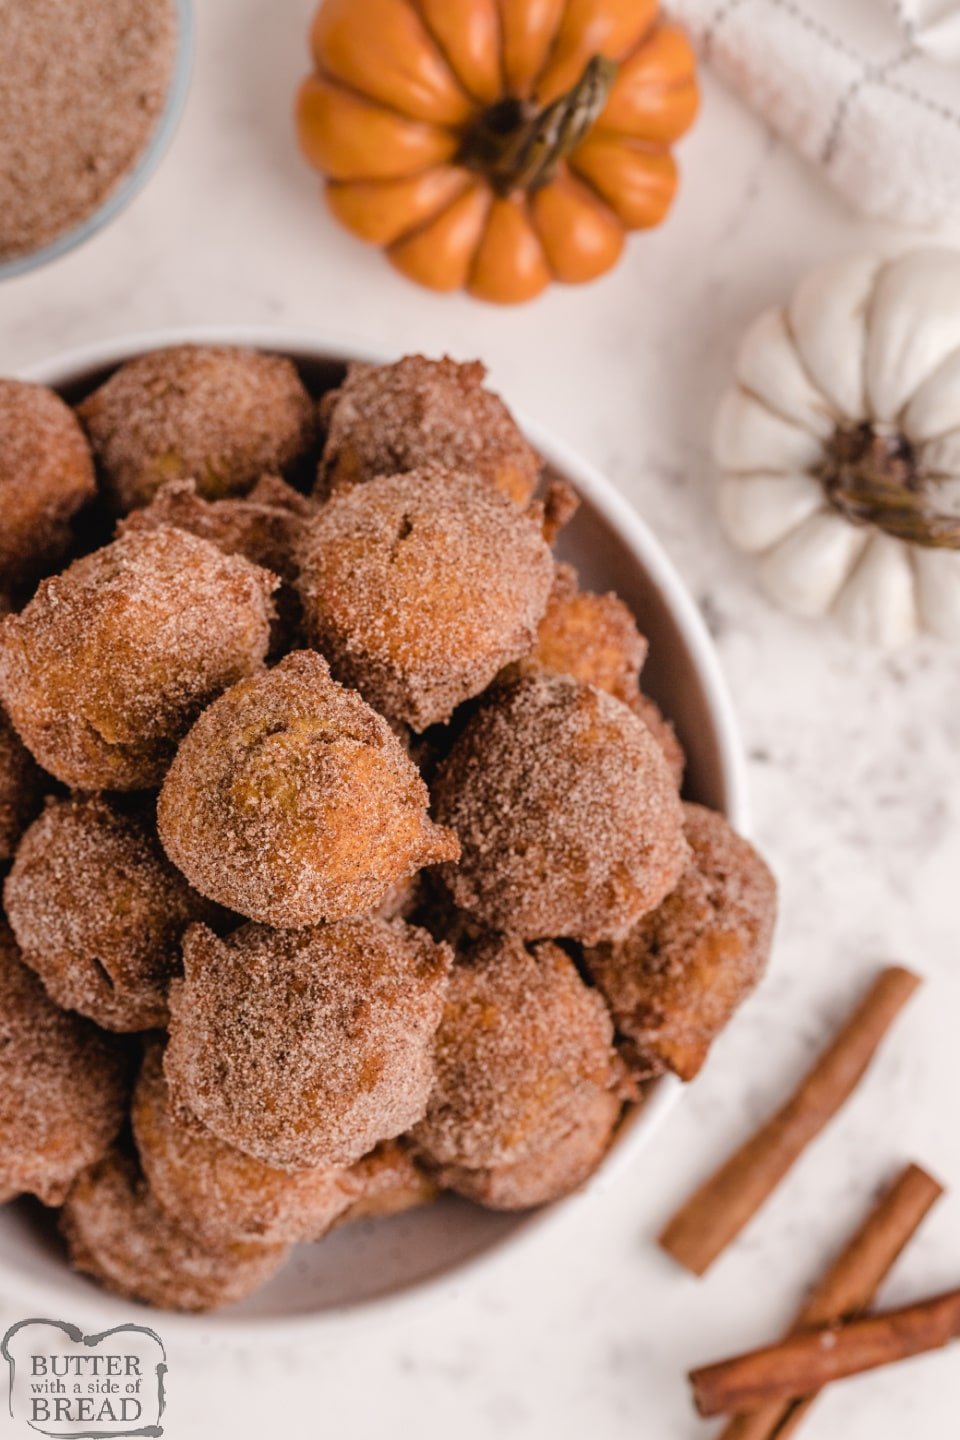 Pumpkin Donut Holes coated in cinnamon and sugar